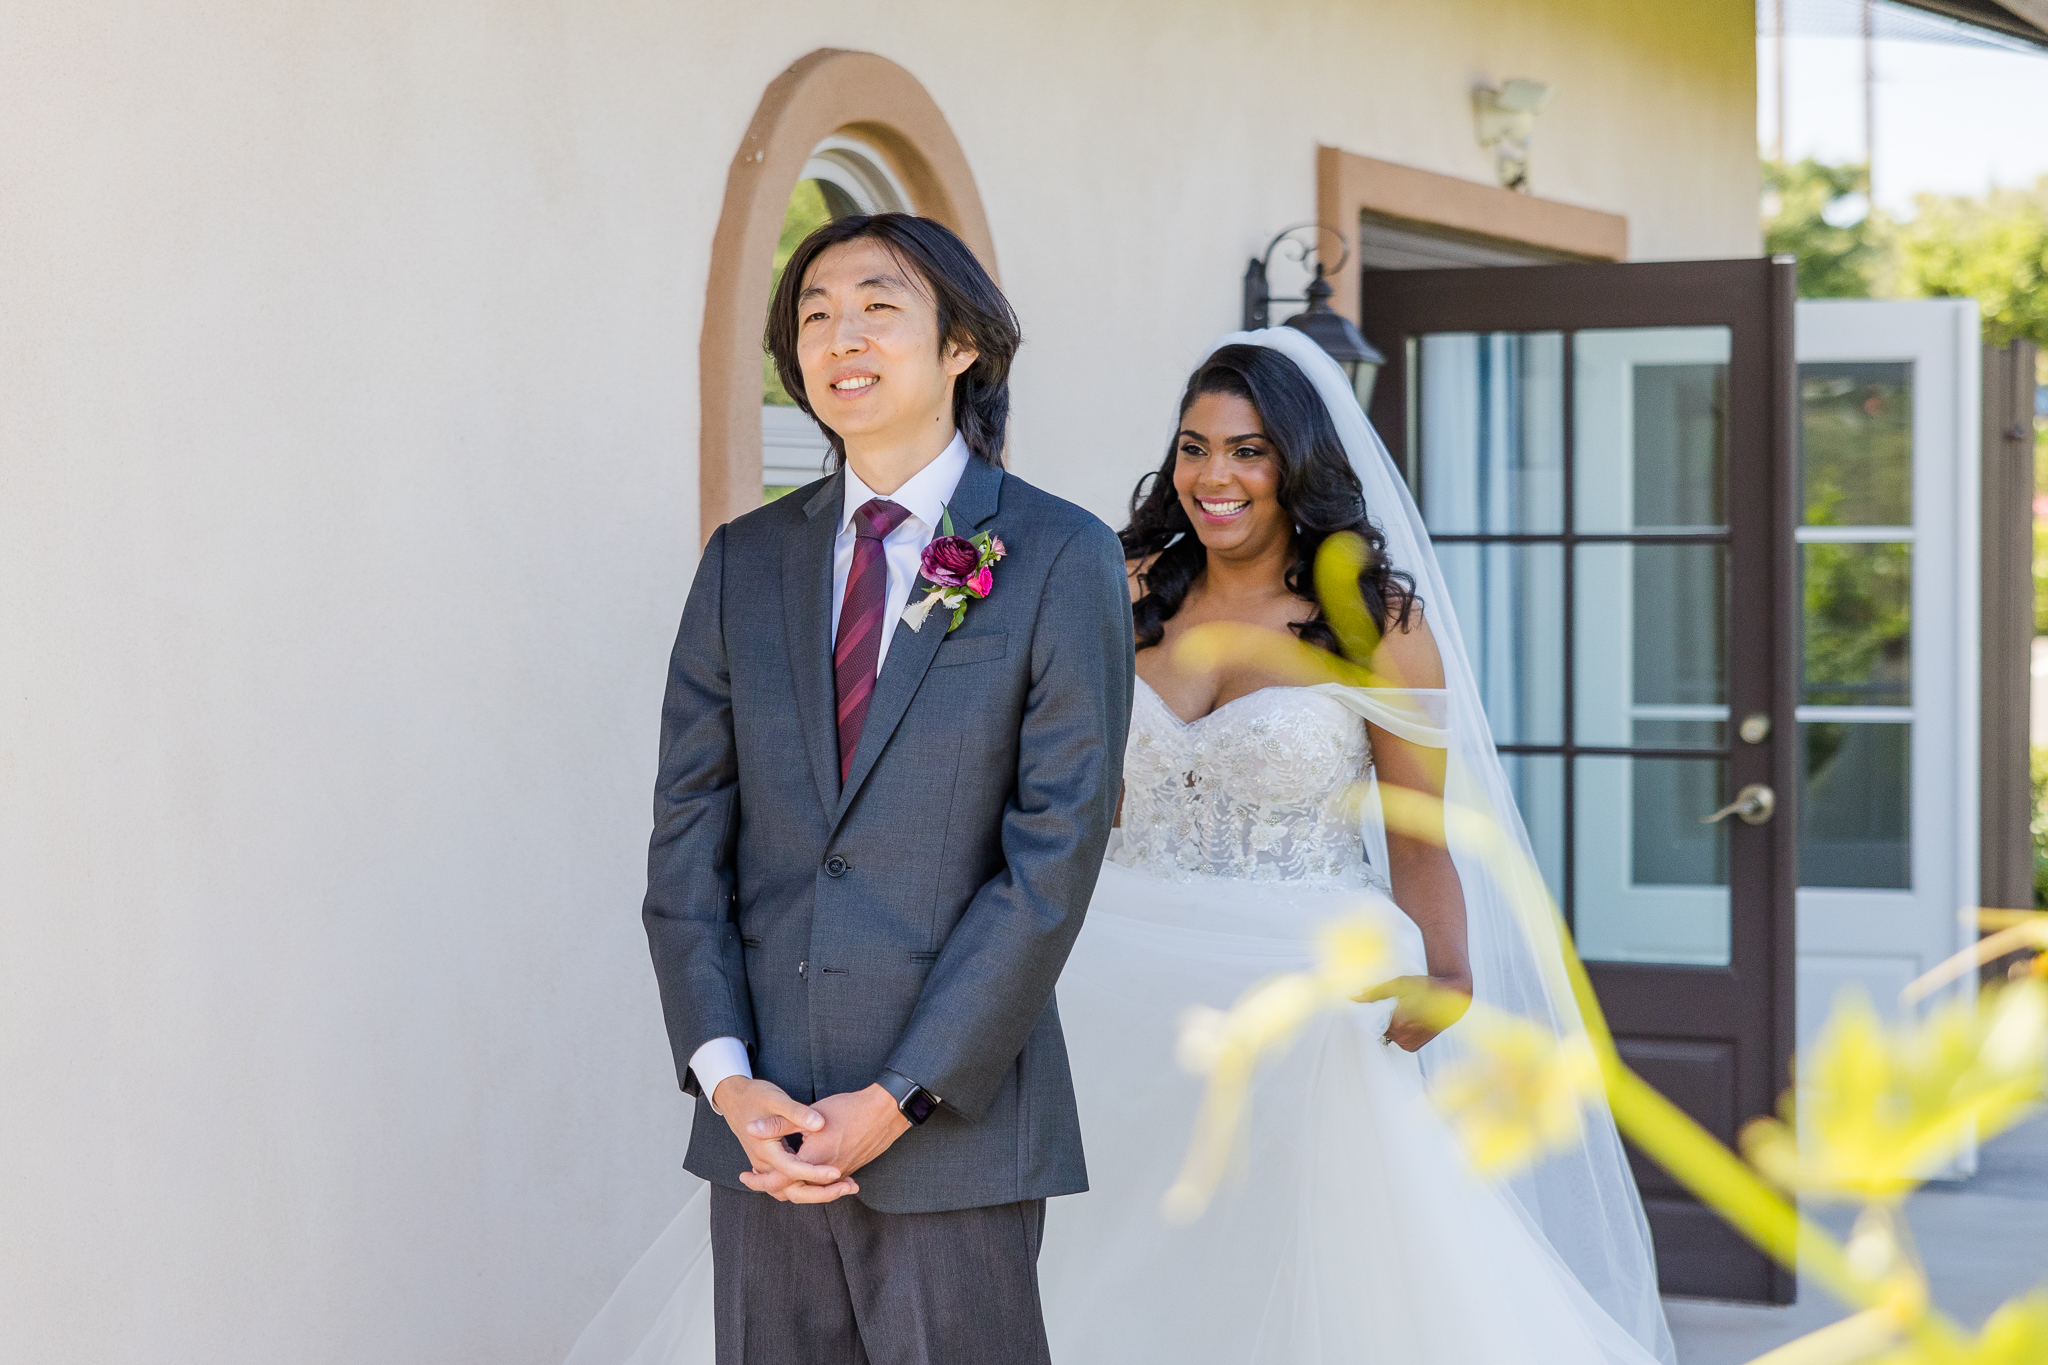 Avensole Vinery in Temecula wedding captured by Carlsbad Photo - San Diego Wedding Photographer